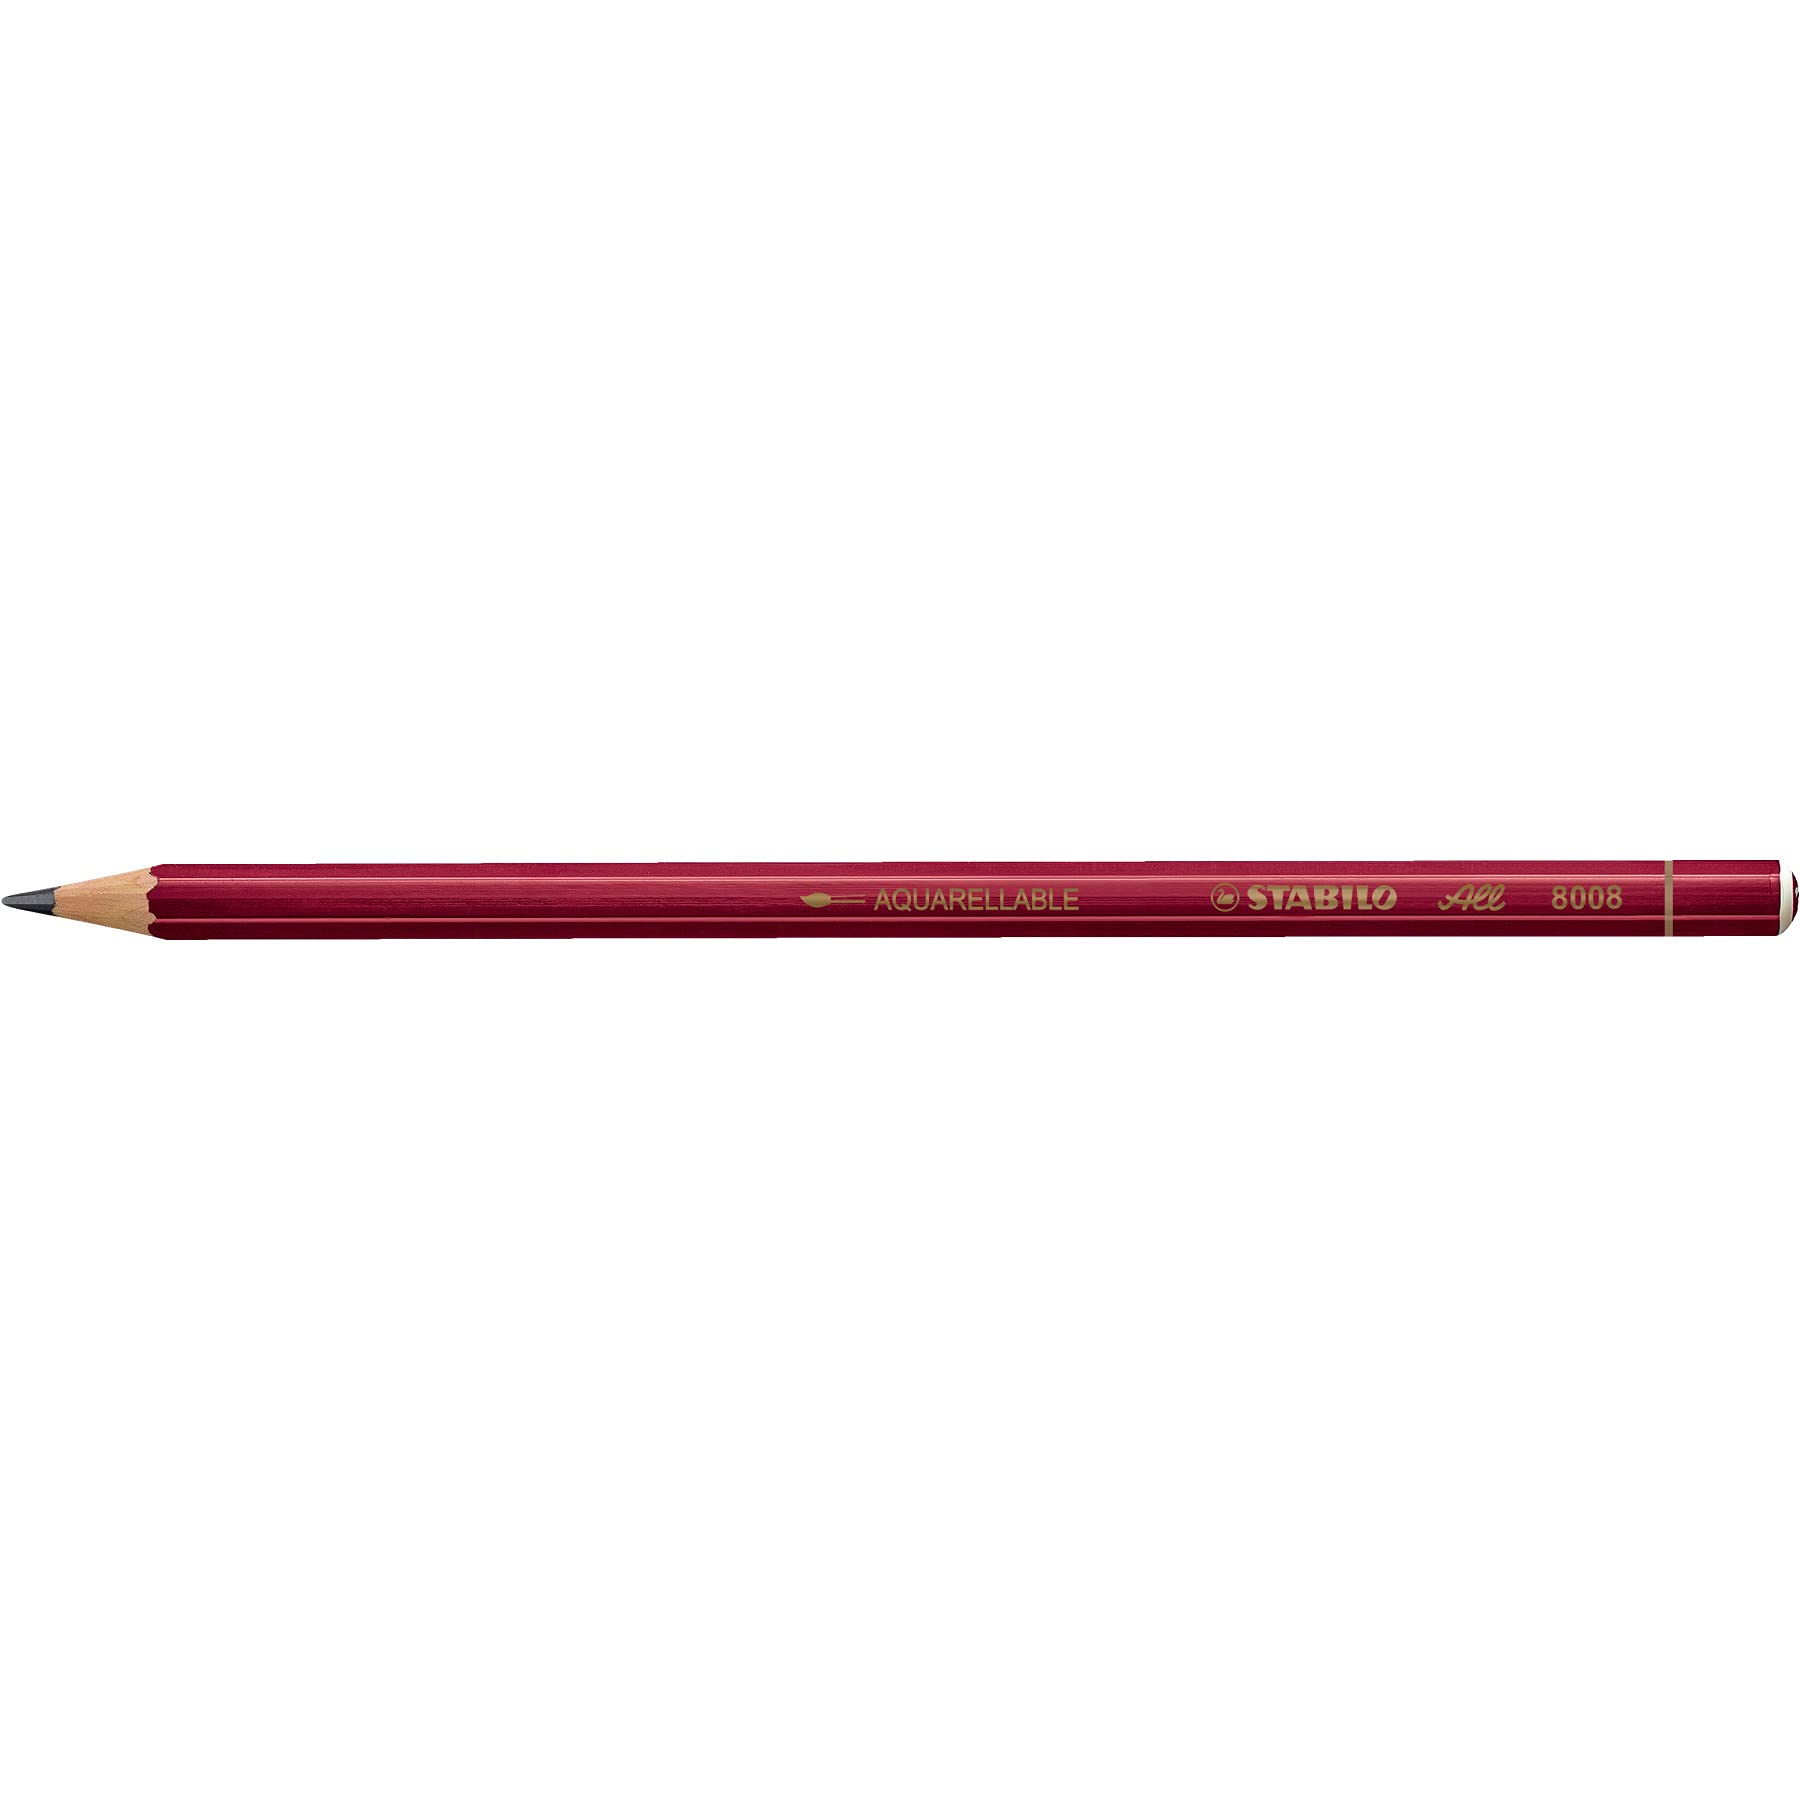 All-Stabilo Drawing Pencils – Graphite